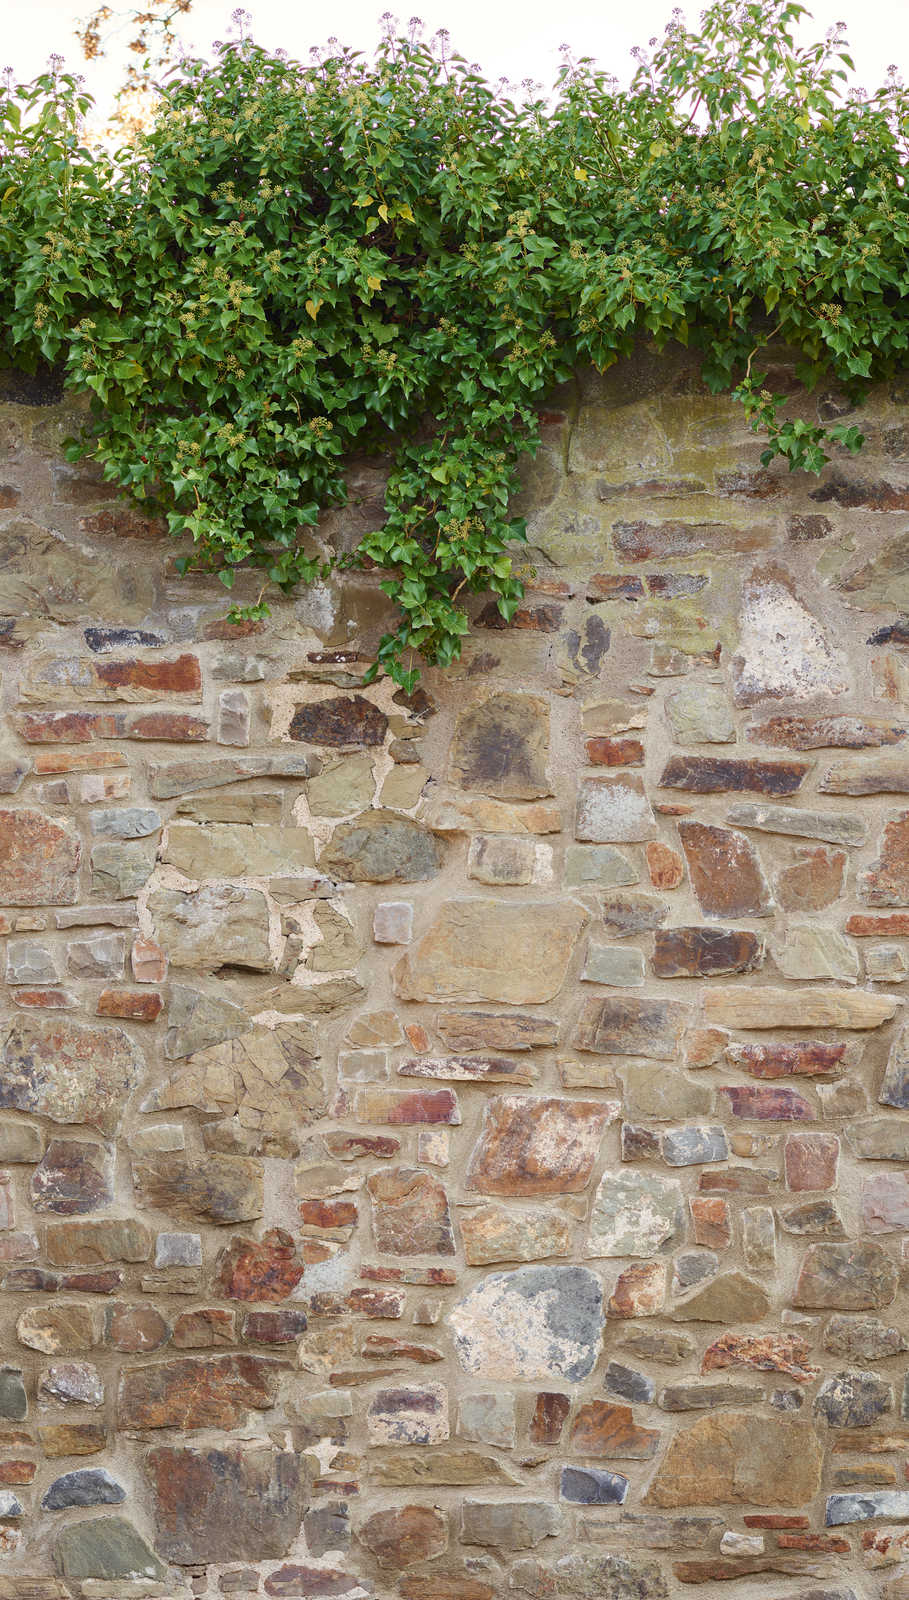             Carta da parati Stone Wall Optics con cespugli di edera - Beige, Marrone, Verde
        